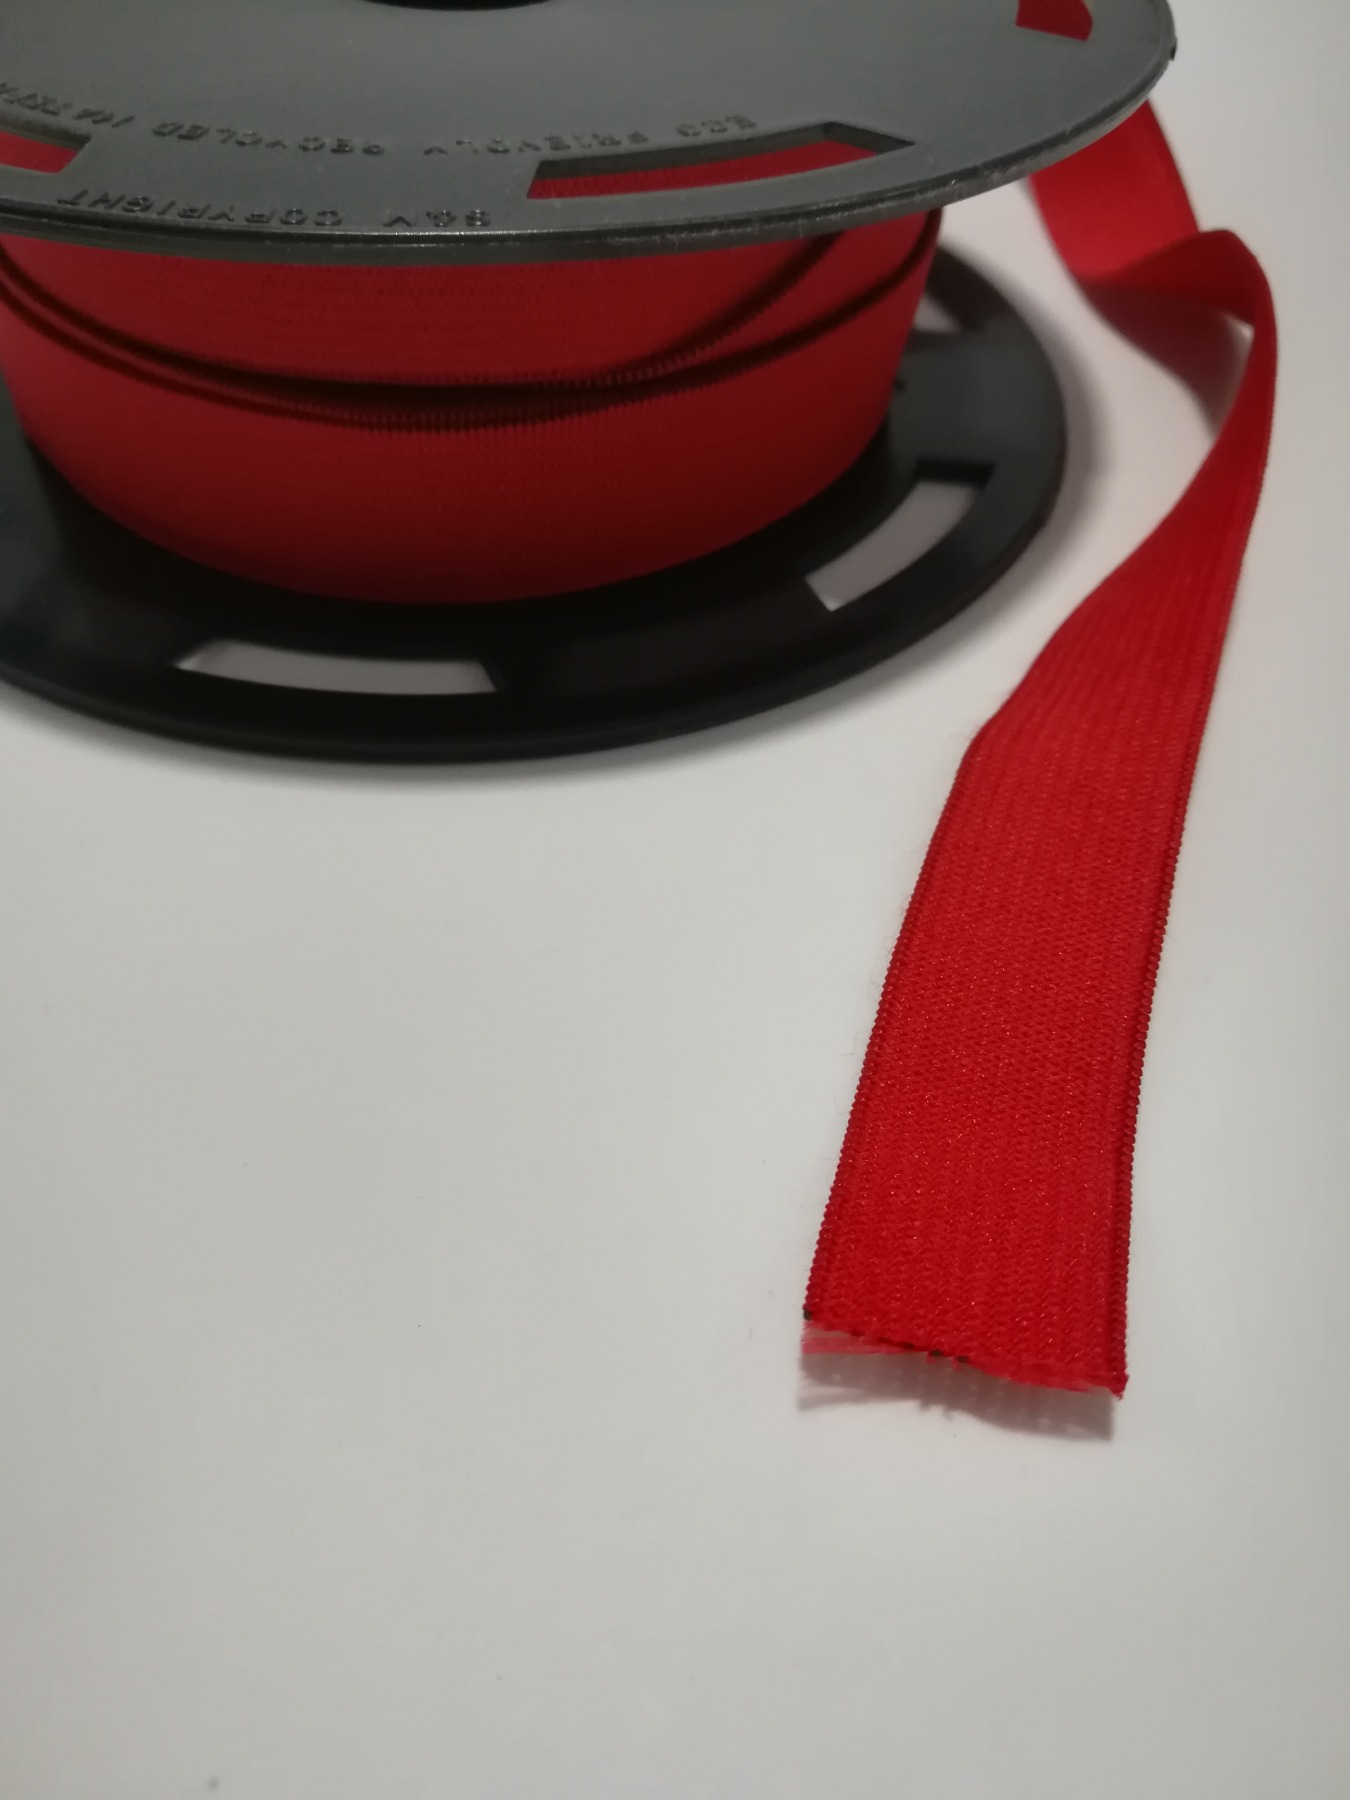 Flachgummi 2cm breit, rot